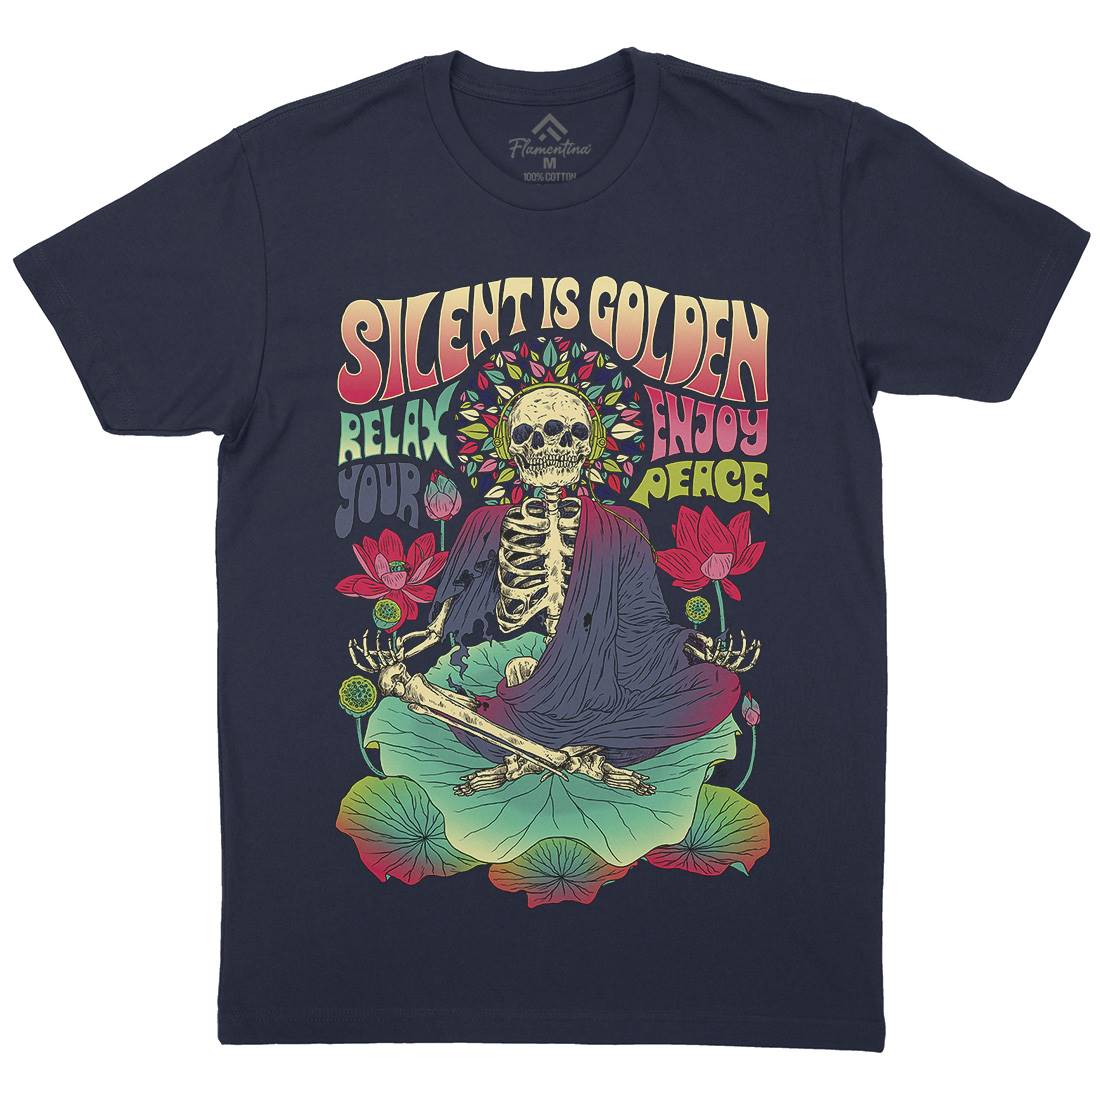 Silent Is Golden Mens Crew Neck T-Shirt Peace D080